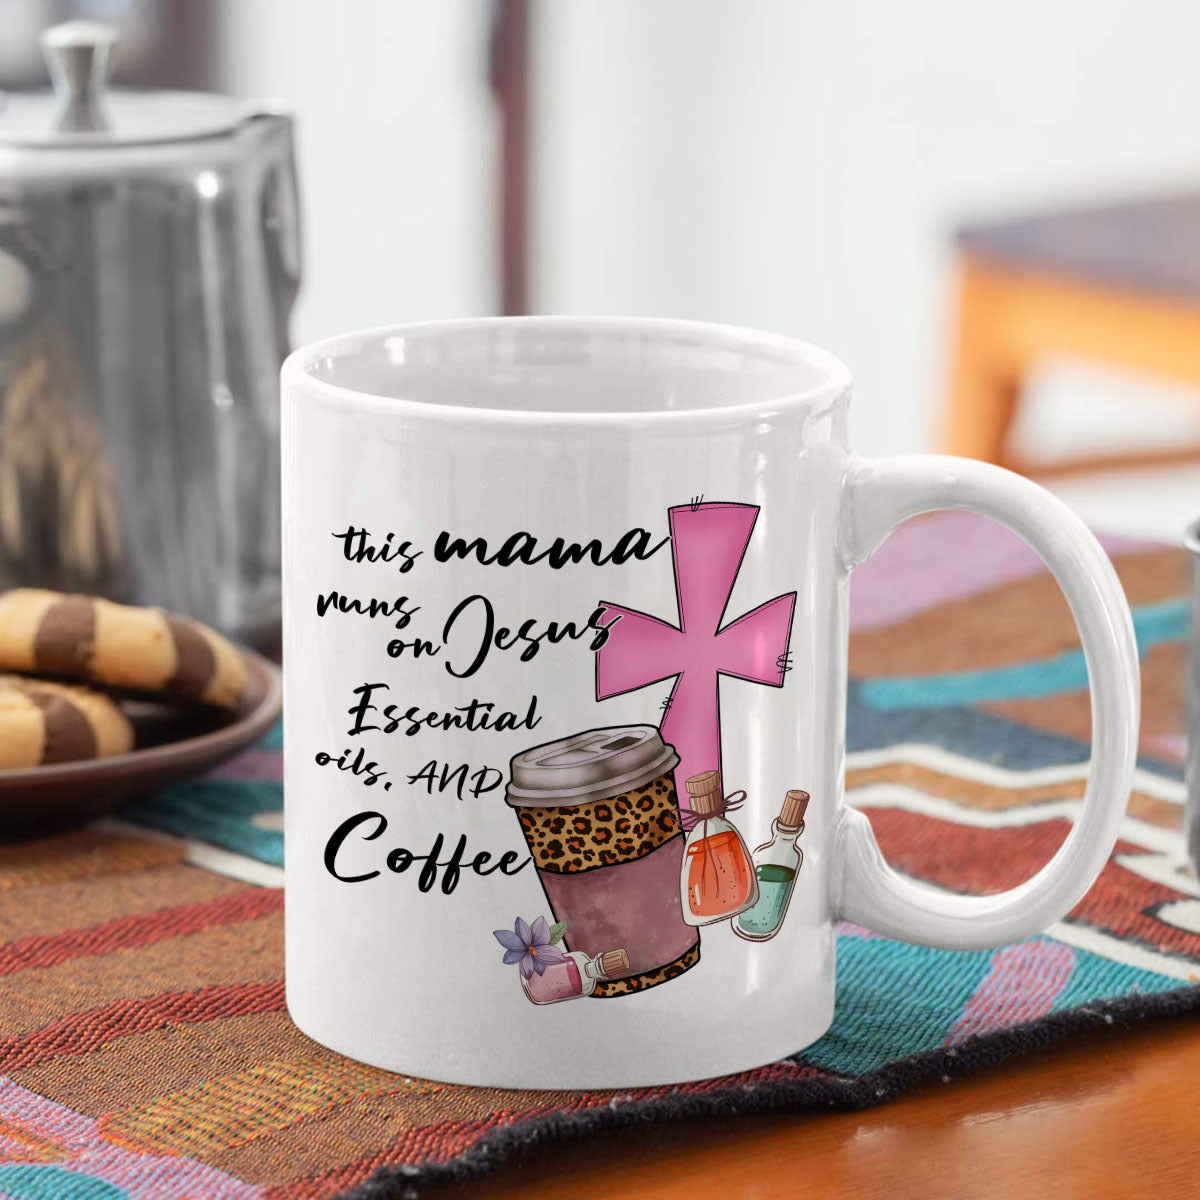 This Mama Runs On Jesus, Essential Oils, And Coffee Christian White Ceramic Mug Double Side Print claimedbygoddesigns